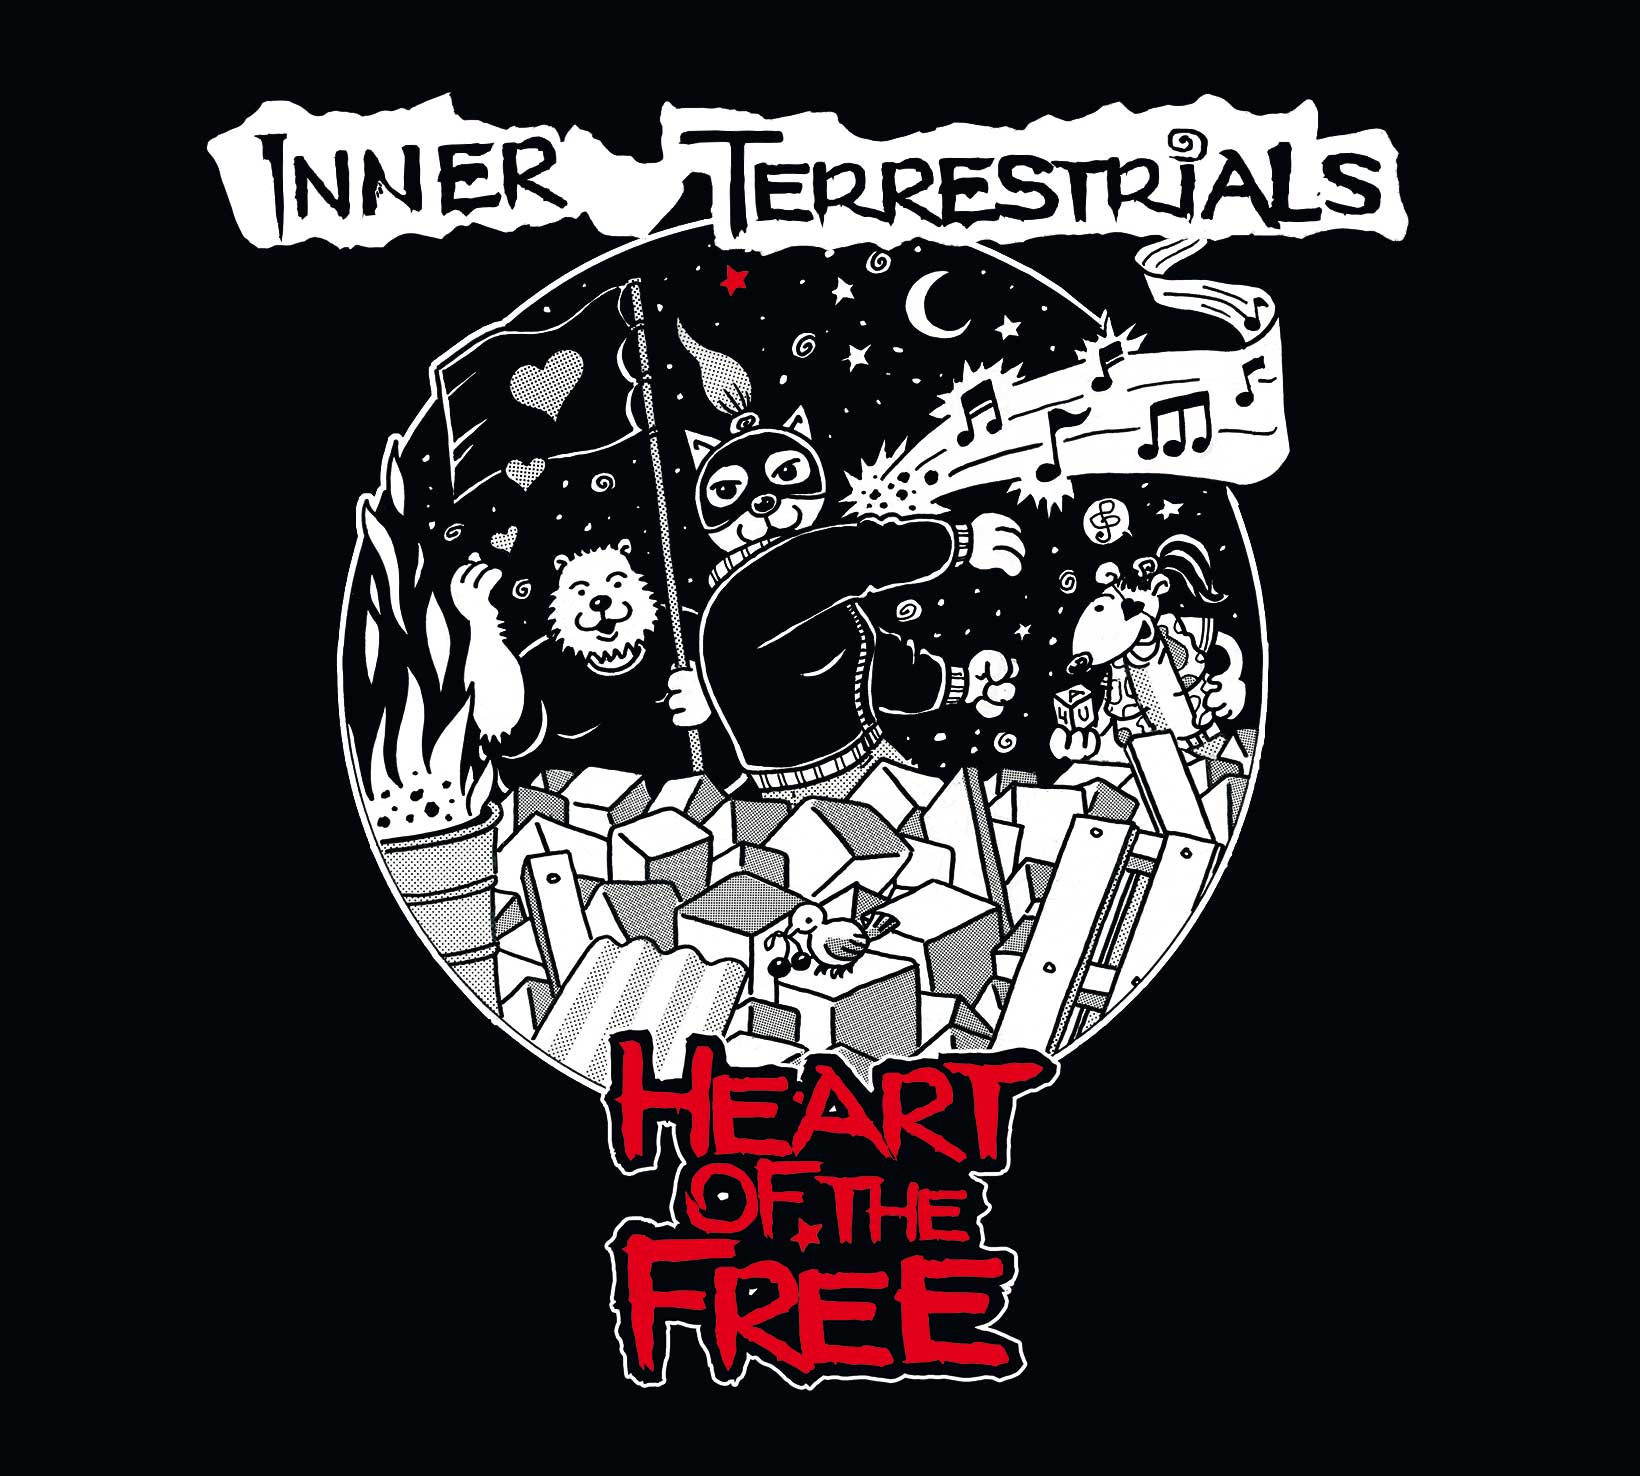 INNER TERRESTRIALS "Heart of the Free" - 33T